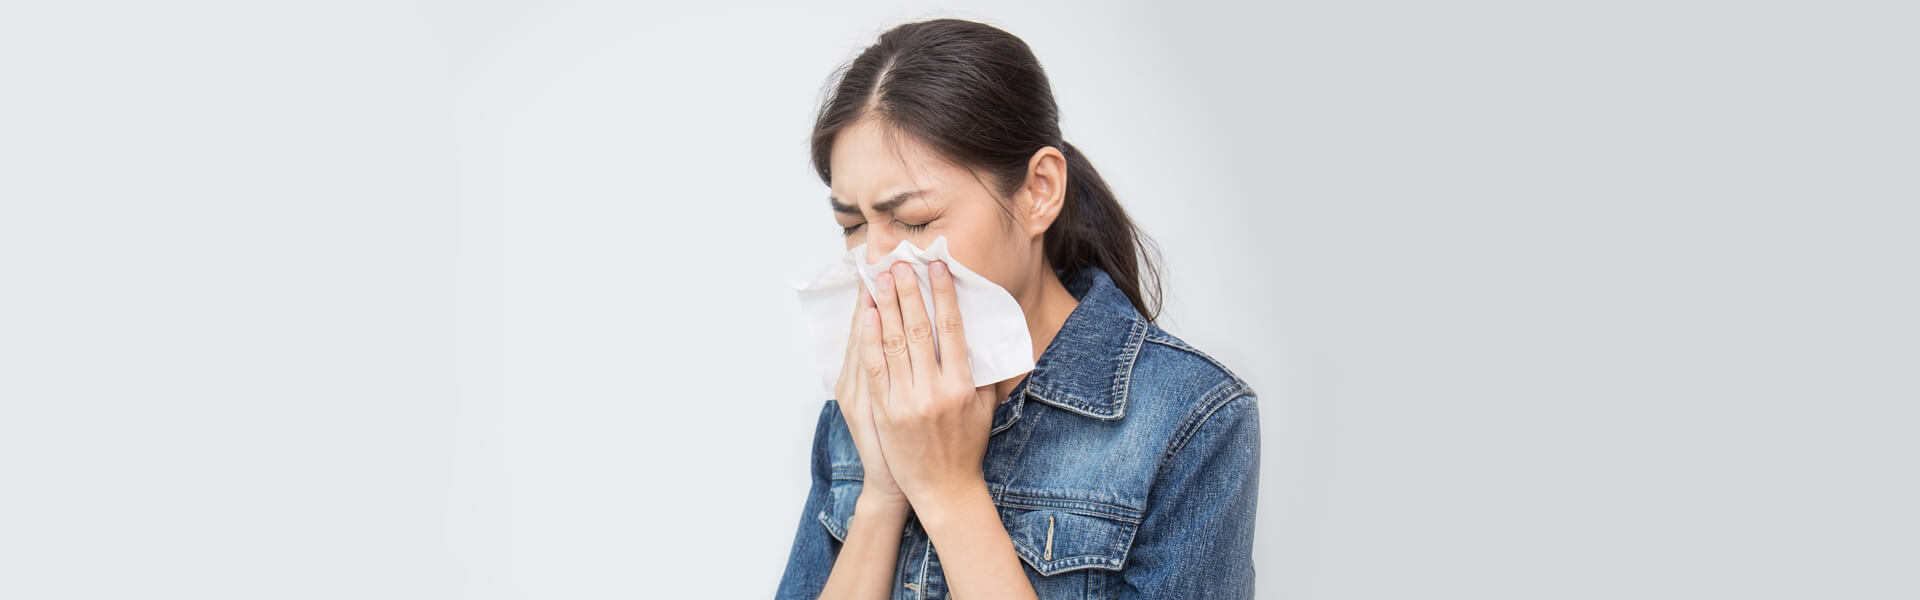 Dr. Reddy’s Flu Preventing Tips